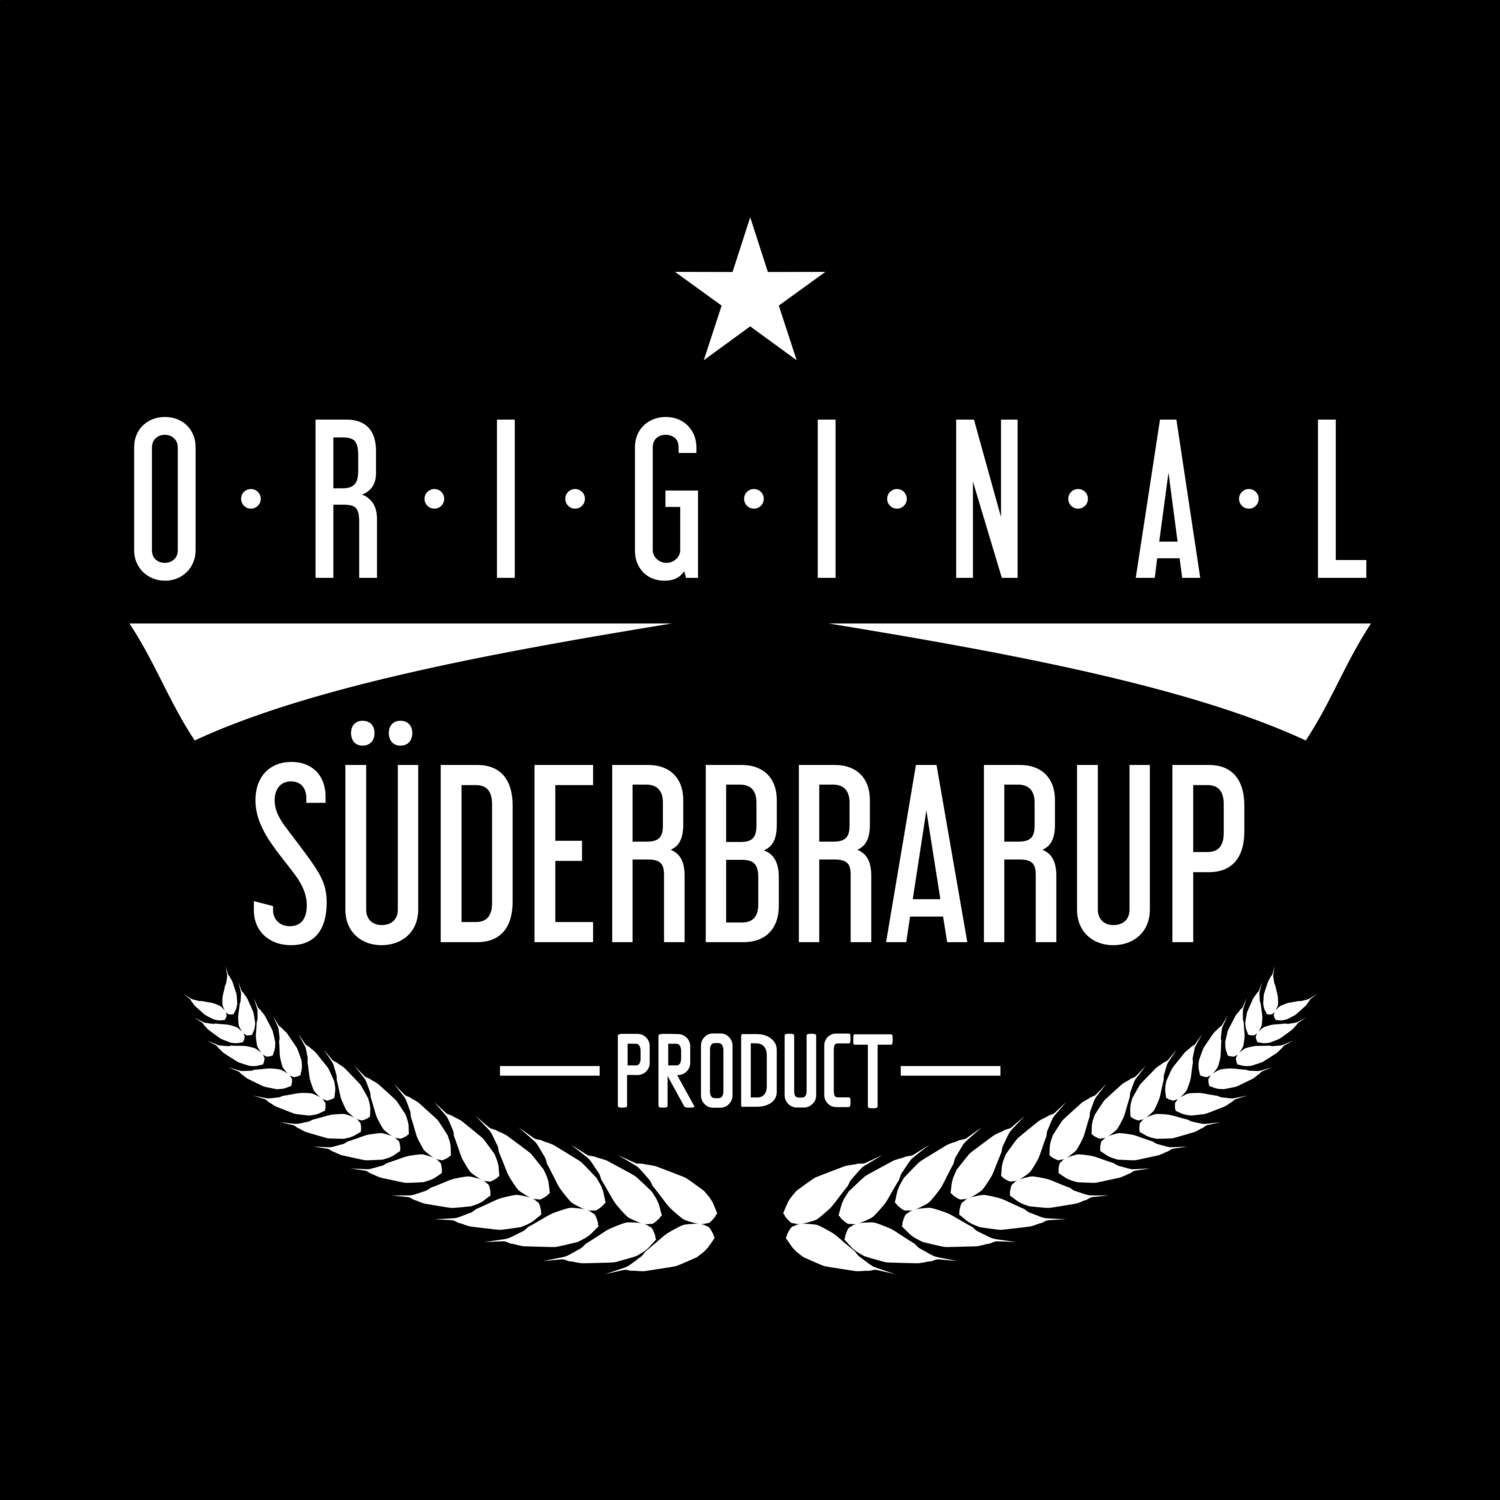 Süderbrarup T-Shirt »Original Product«